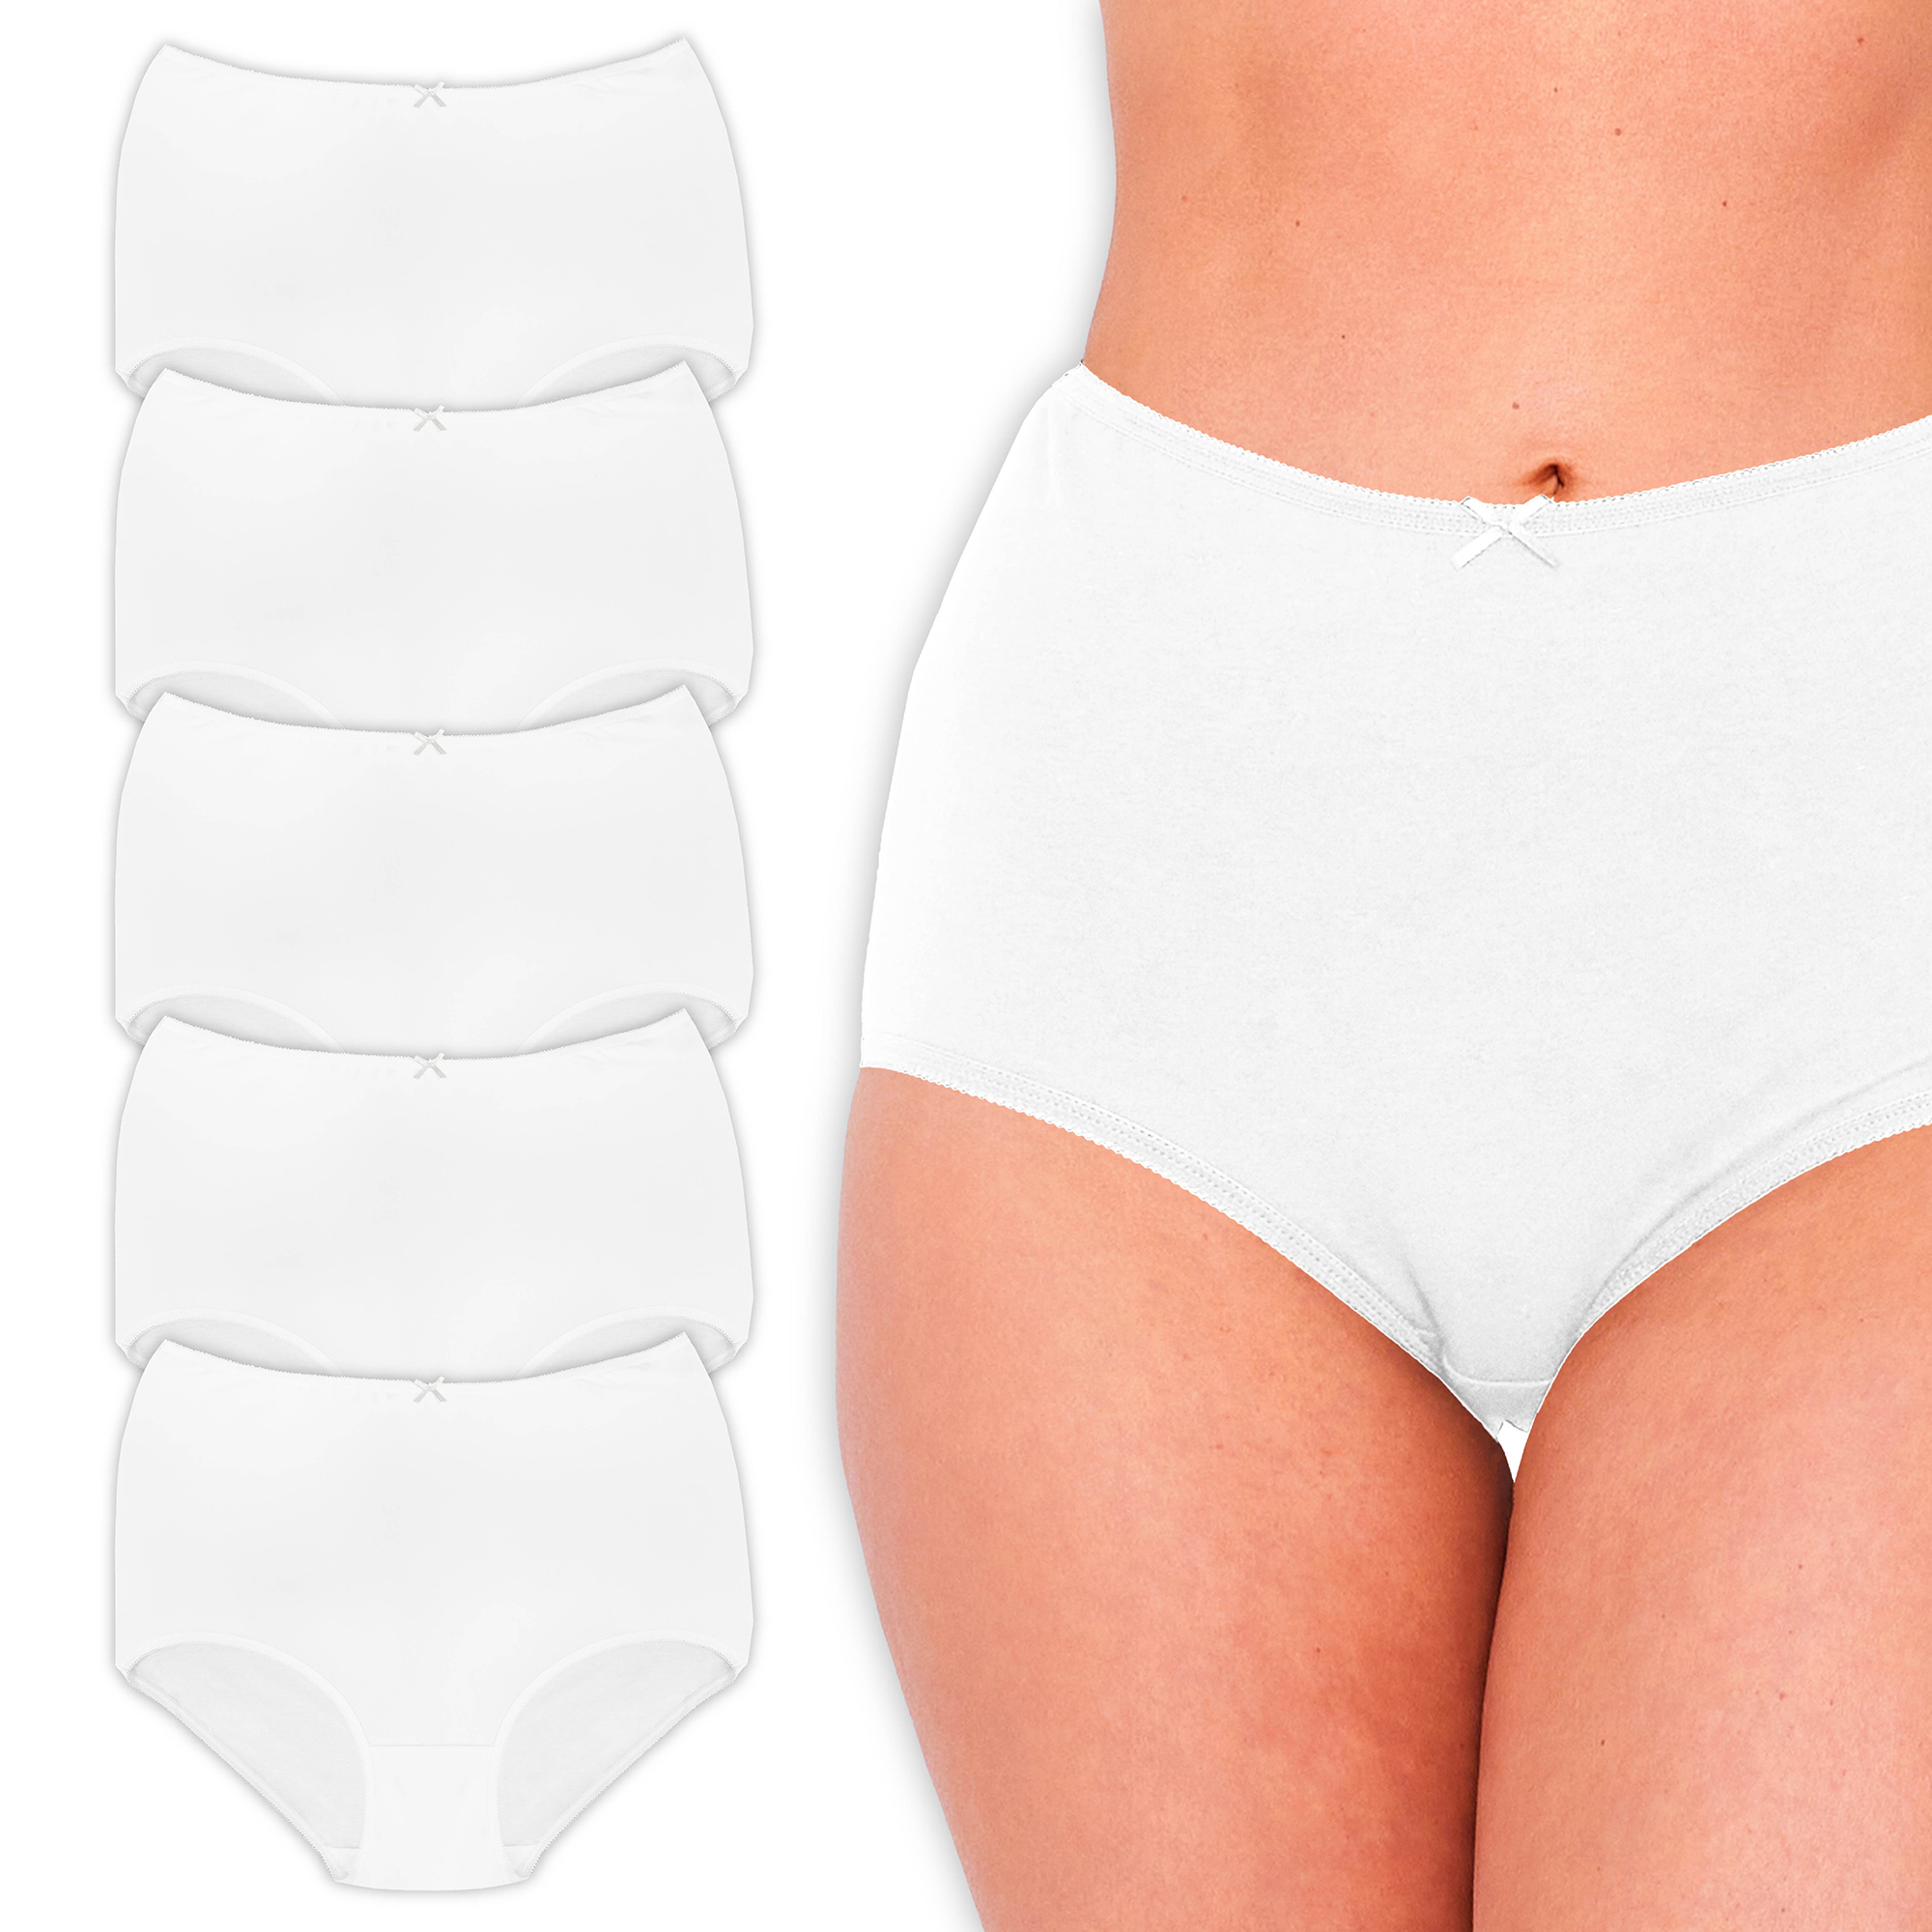 HAPPYDOG Women's Underwear Ladies Soft Full Briefs Panties 5 Pack